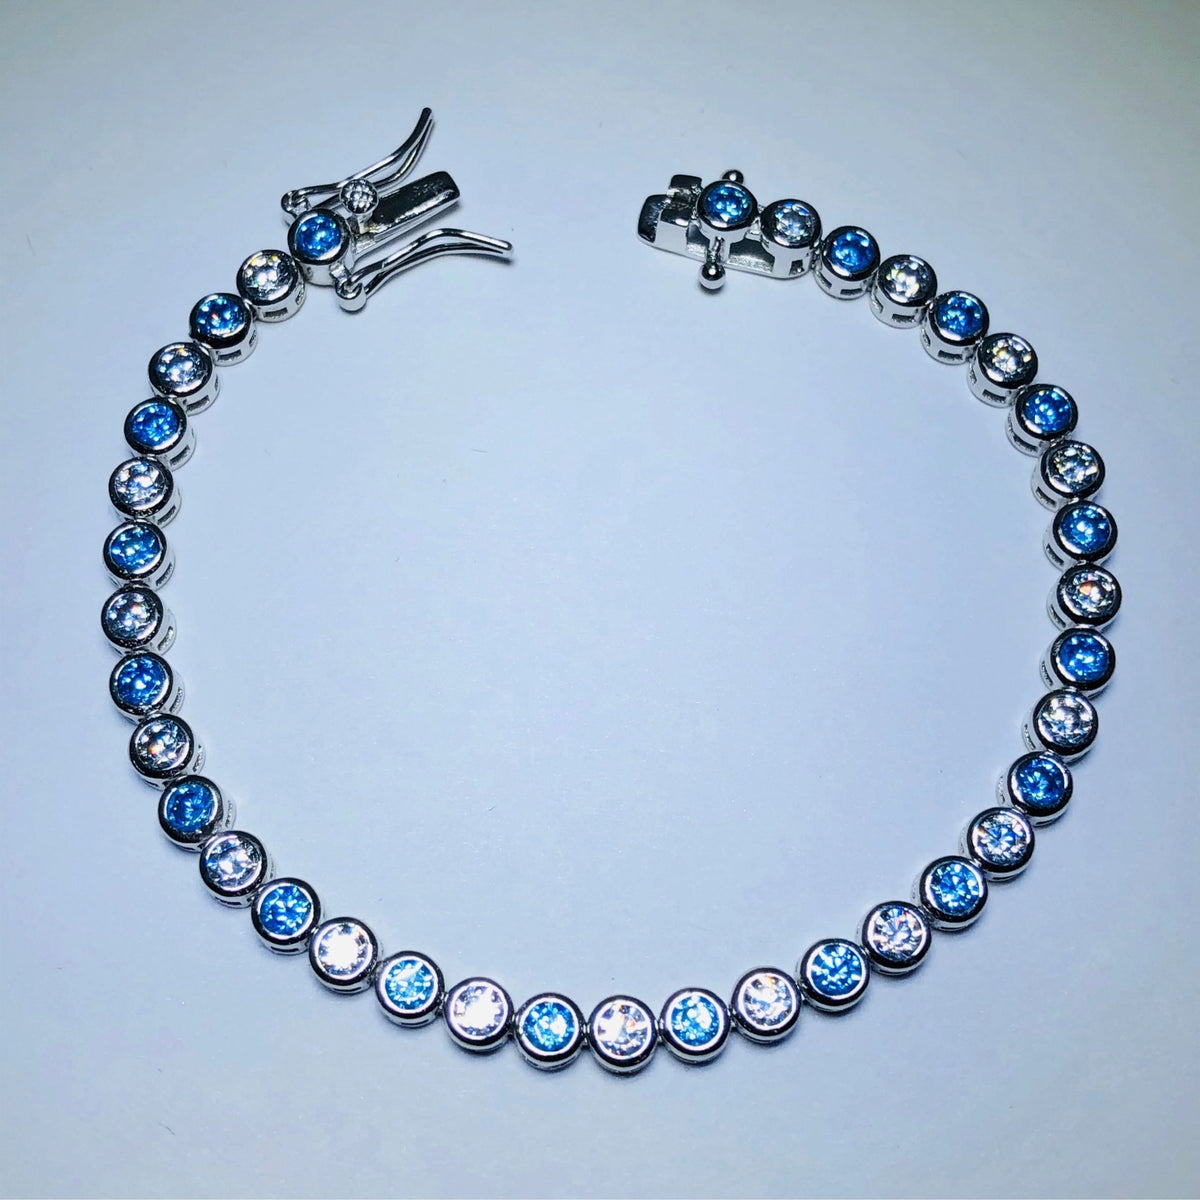 LIV platinum over sterling silver blue & white sapphire bezel tennis bracelet 6” length